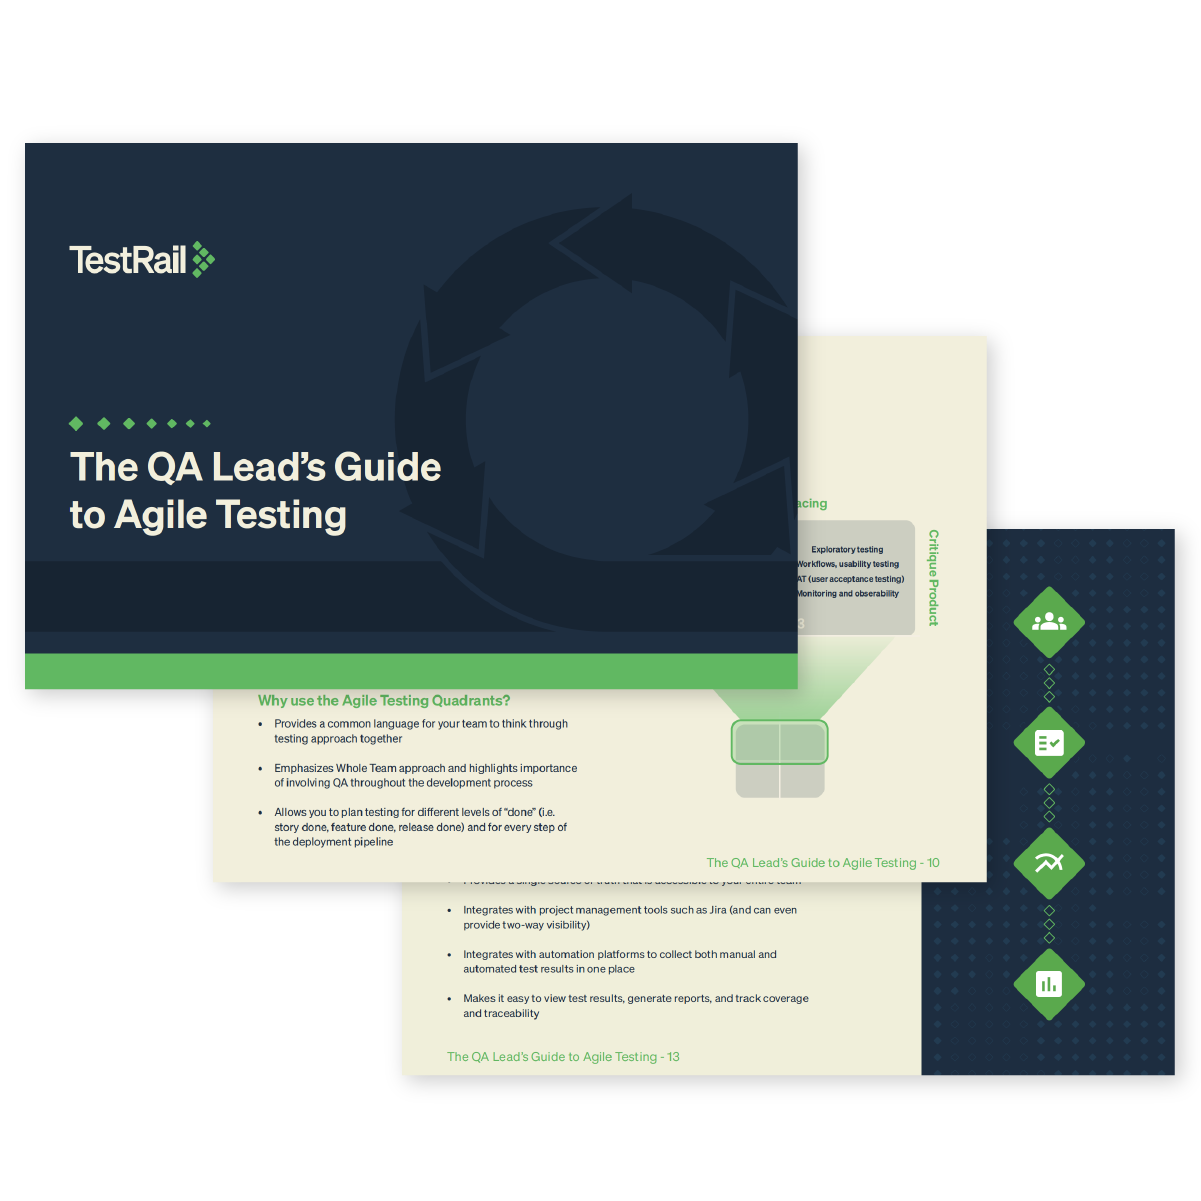 The QA Lead's Guide to Agile Testing